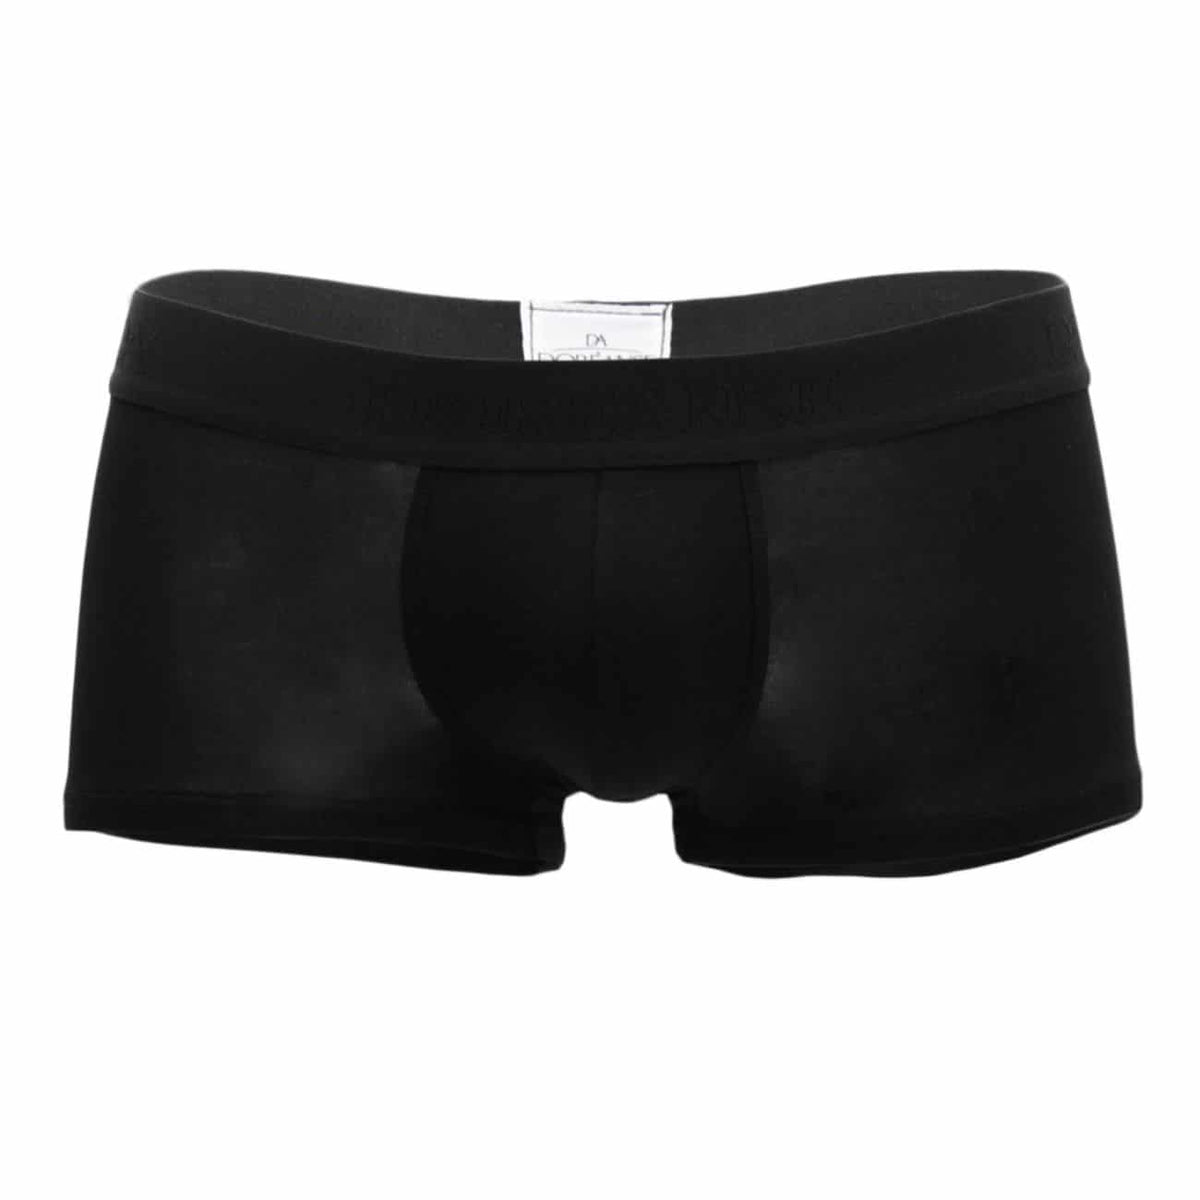 Doreanse Underwear Low-rise Trunk | Shop MensUnderwear.io